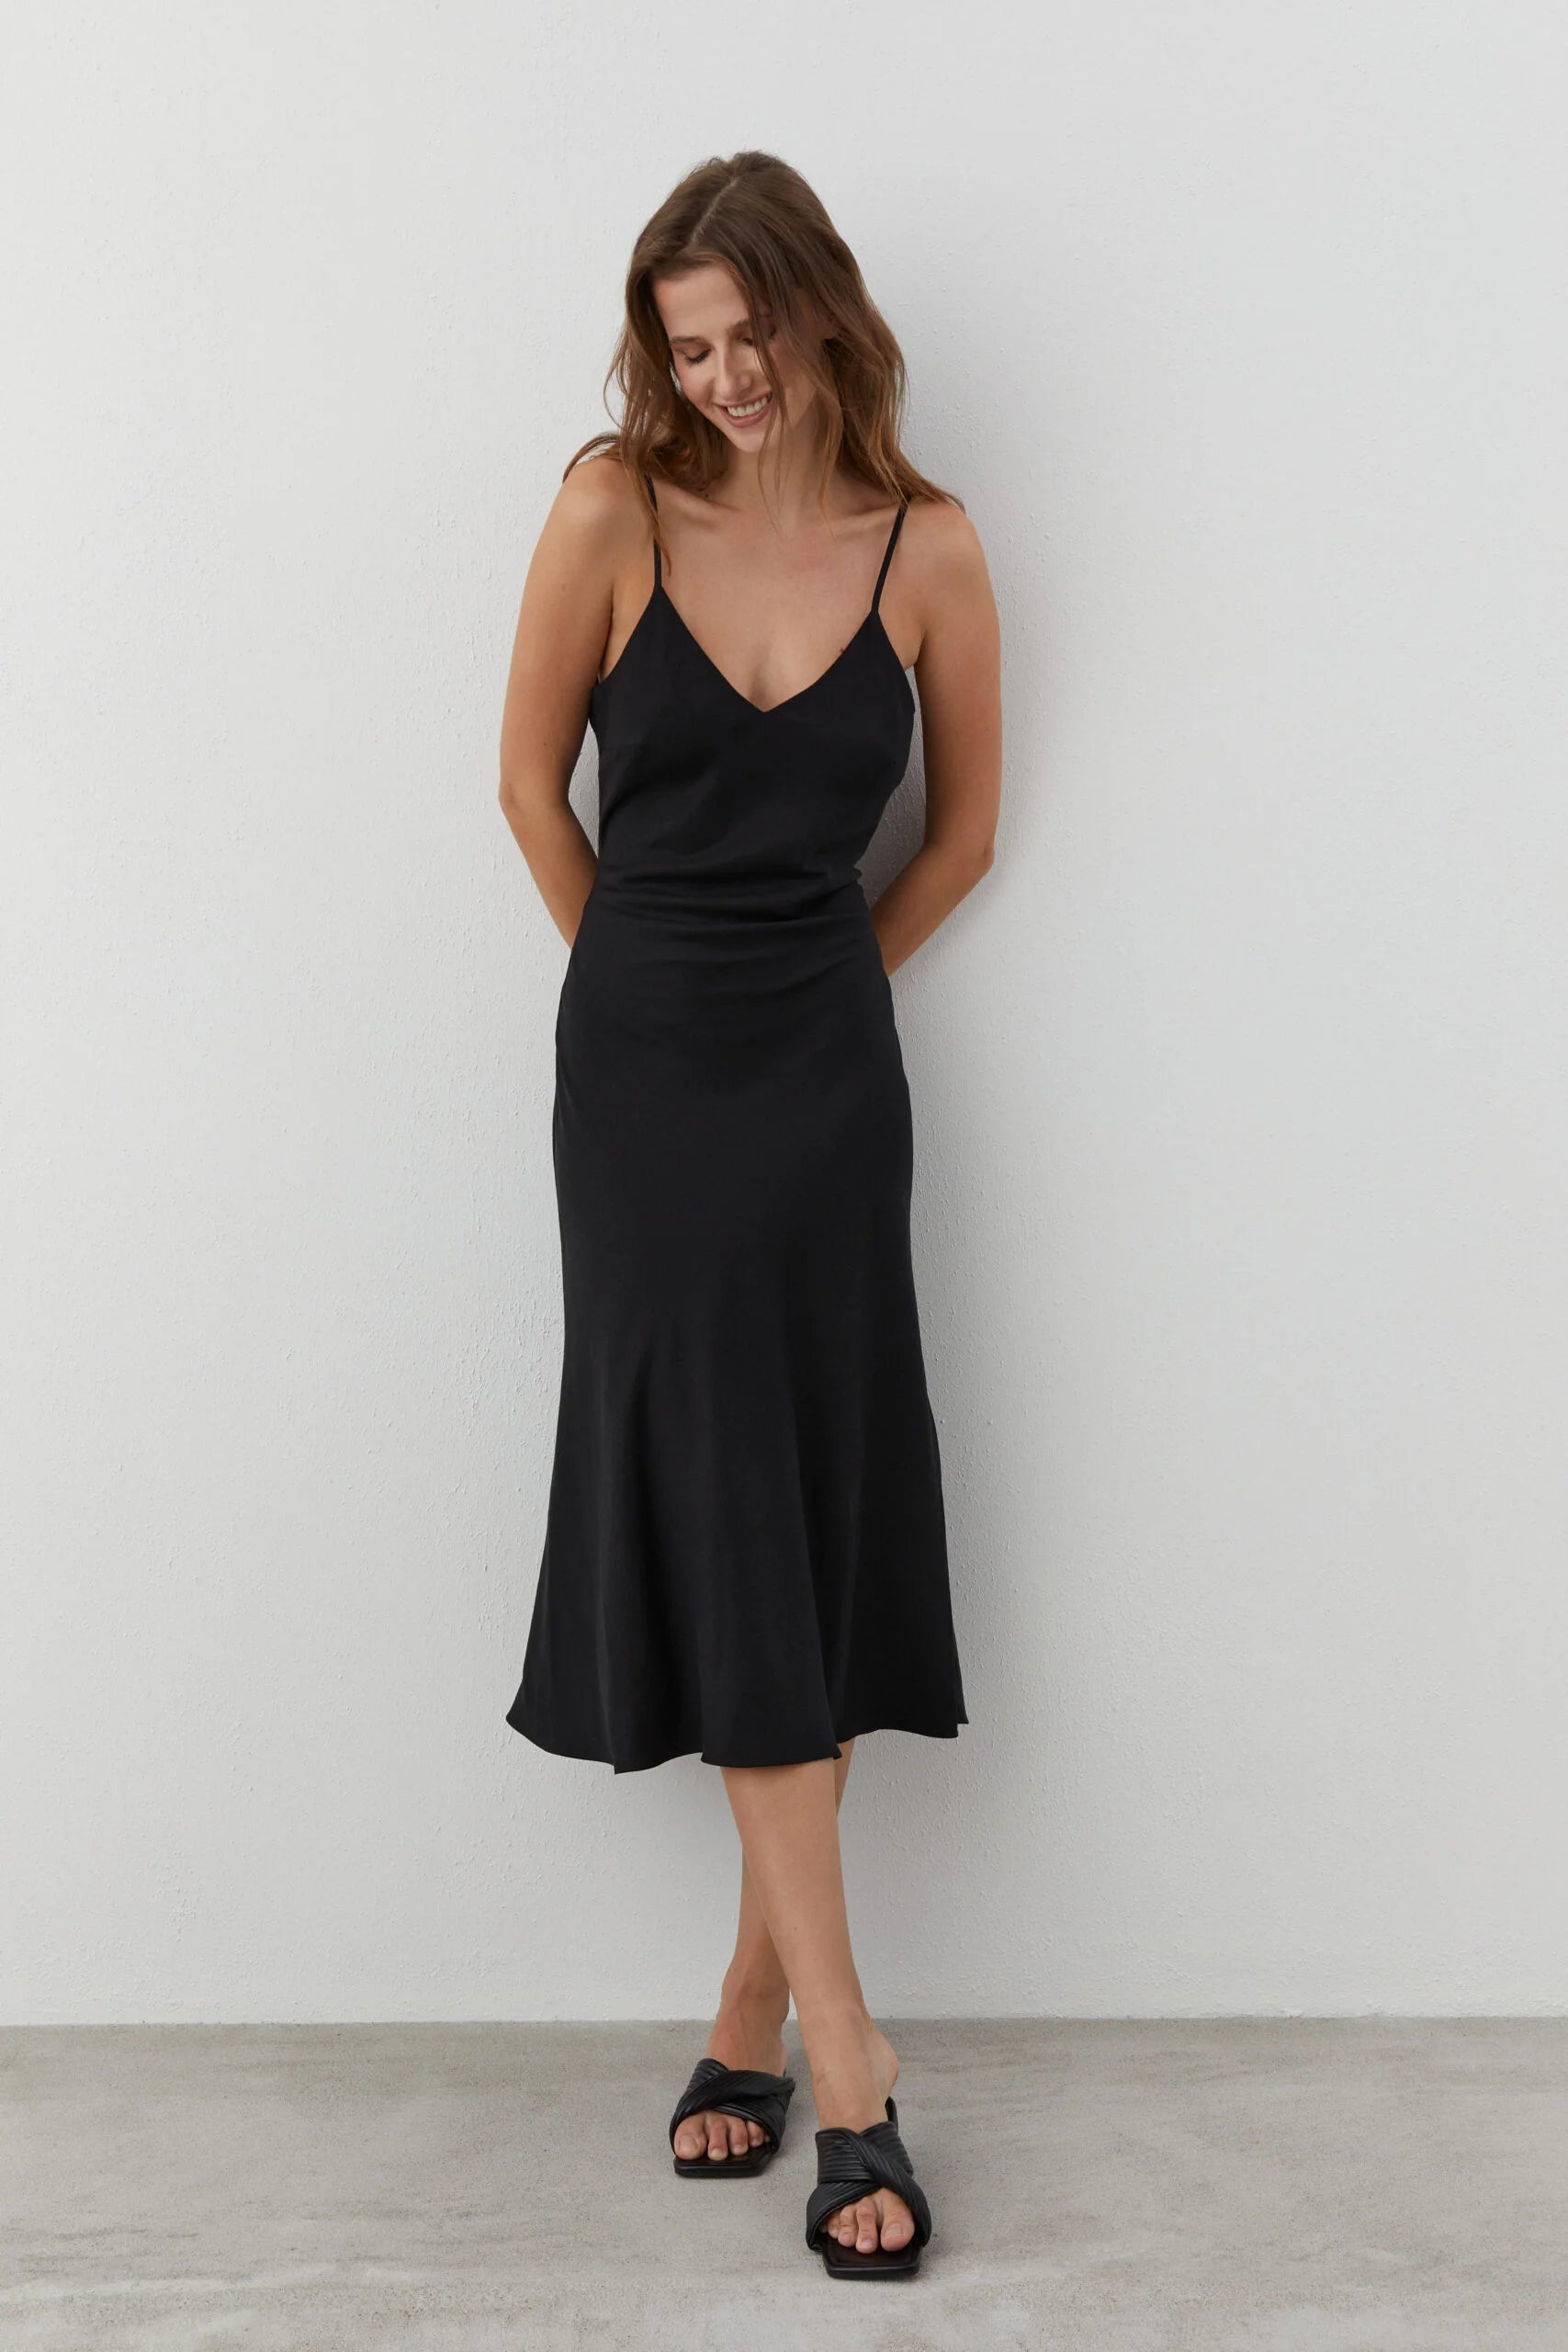 Les Goodies - Duende Sloan Black Dress